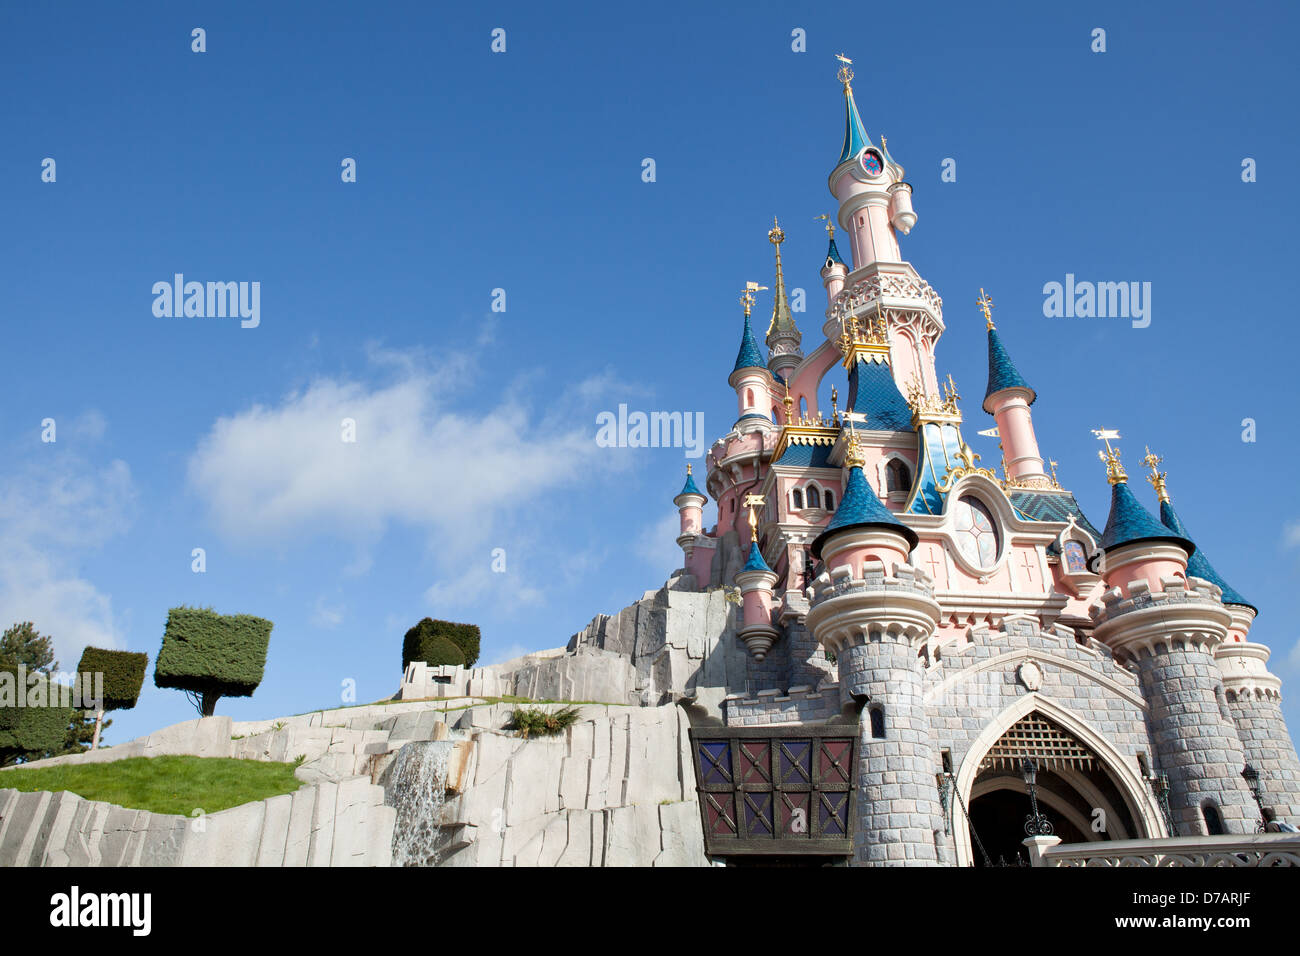 Europe France Paris Marne-la-Vallée Disneyland Sleeping Beauty Castle Stock Photo